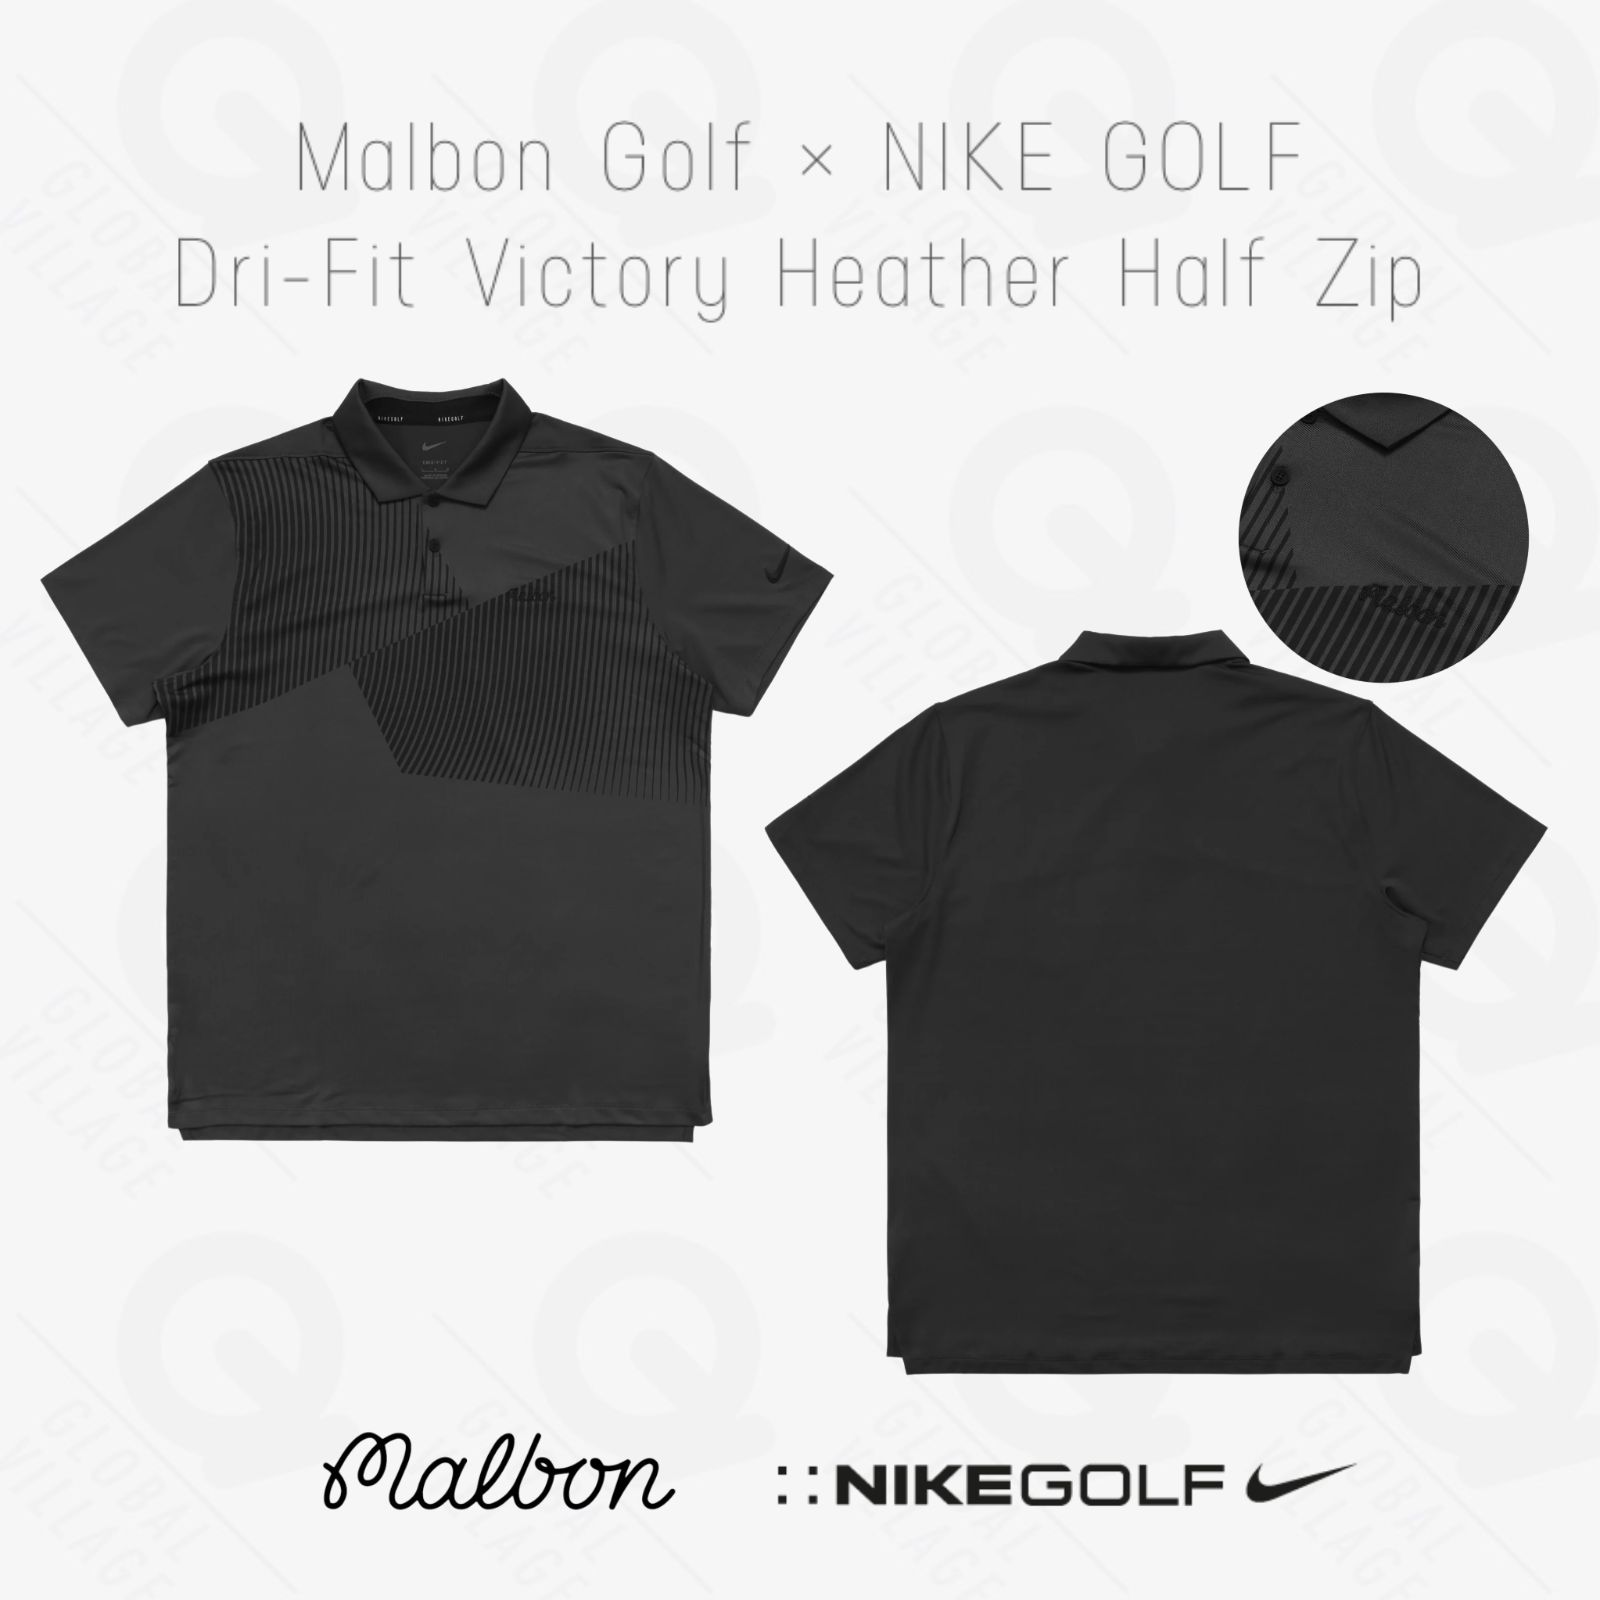 Malbon Golf x Nike Victory Half Zip Top - hoteljahorina.com